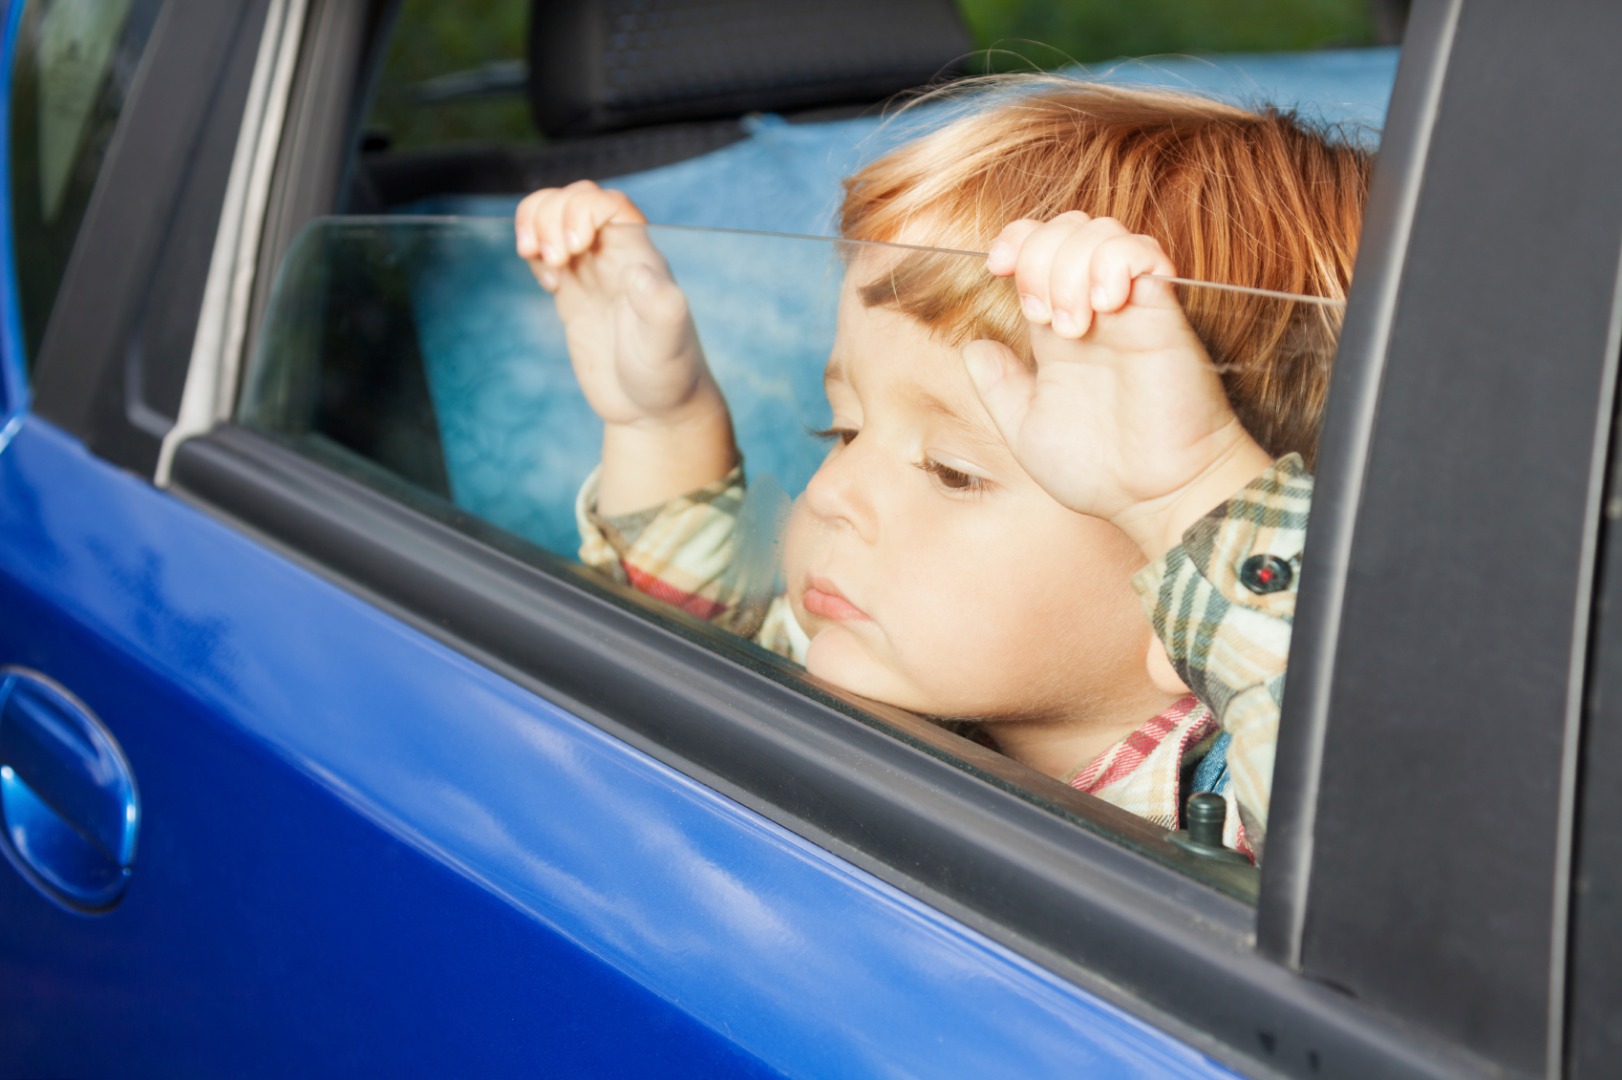 «Если в машине ребенок, то минус 20 км/ч от скорости» - новая инициатива ГИБДД